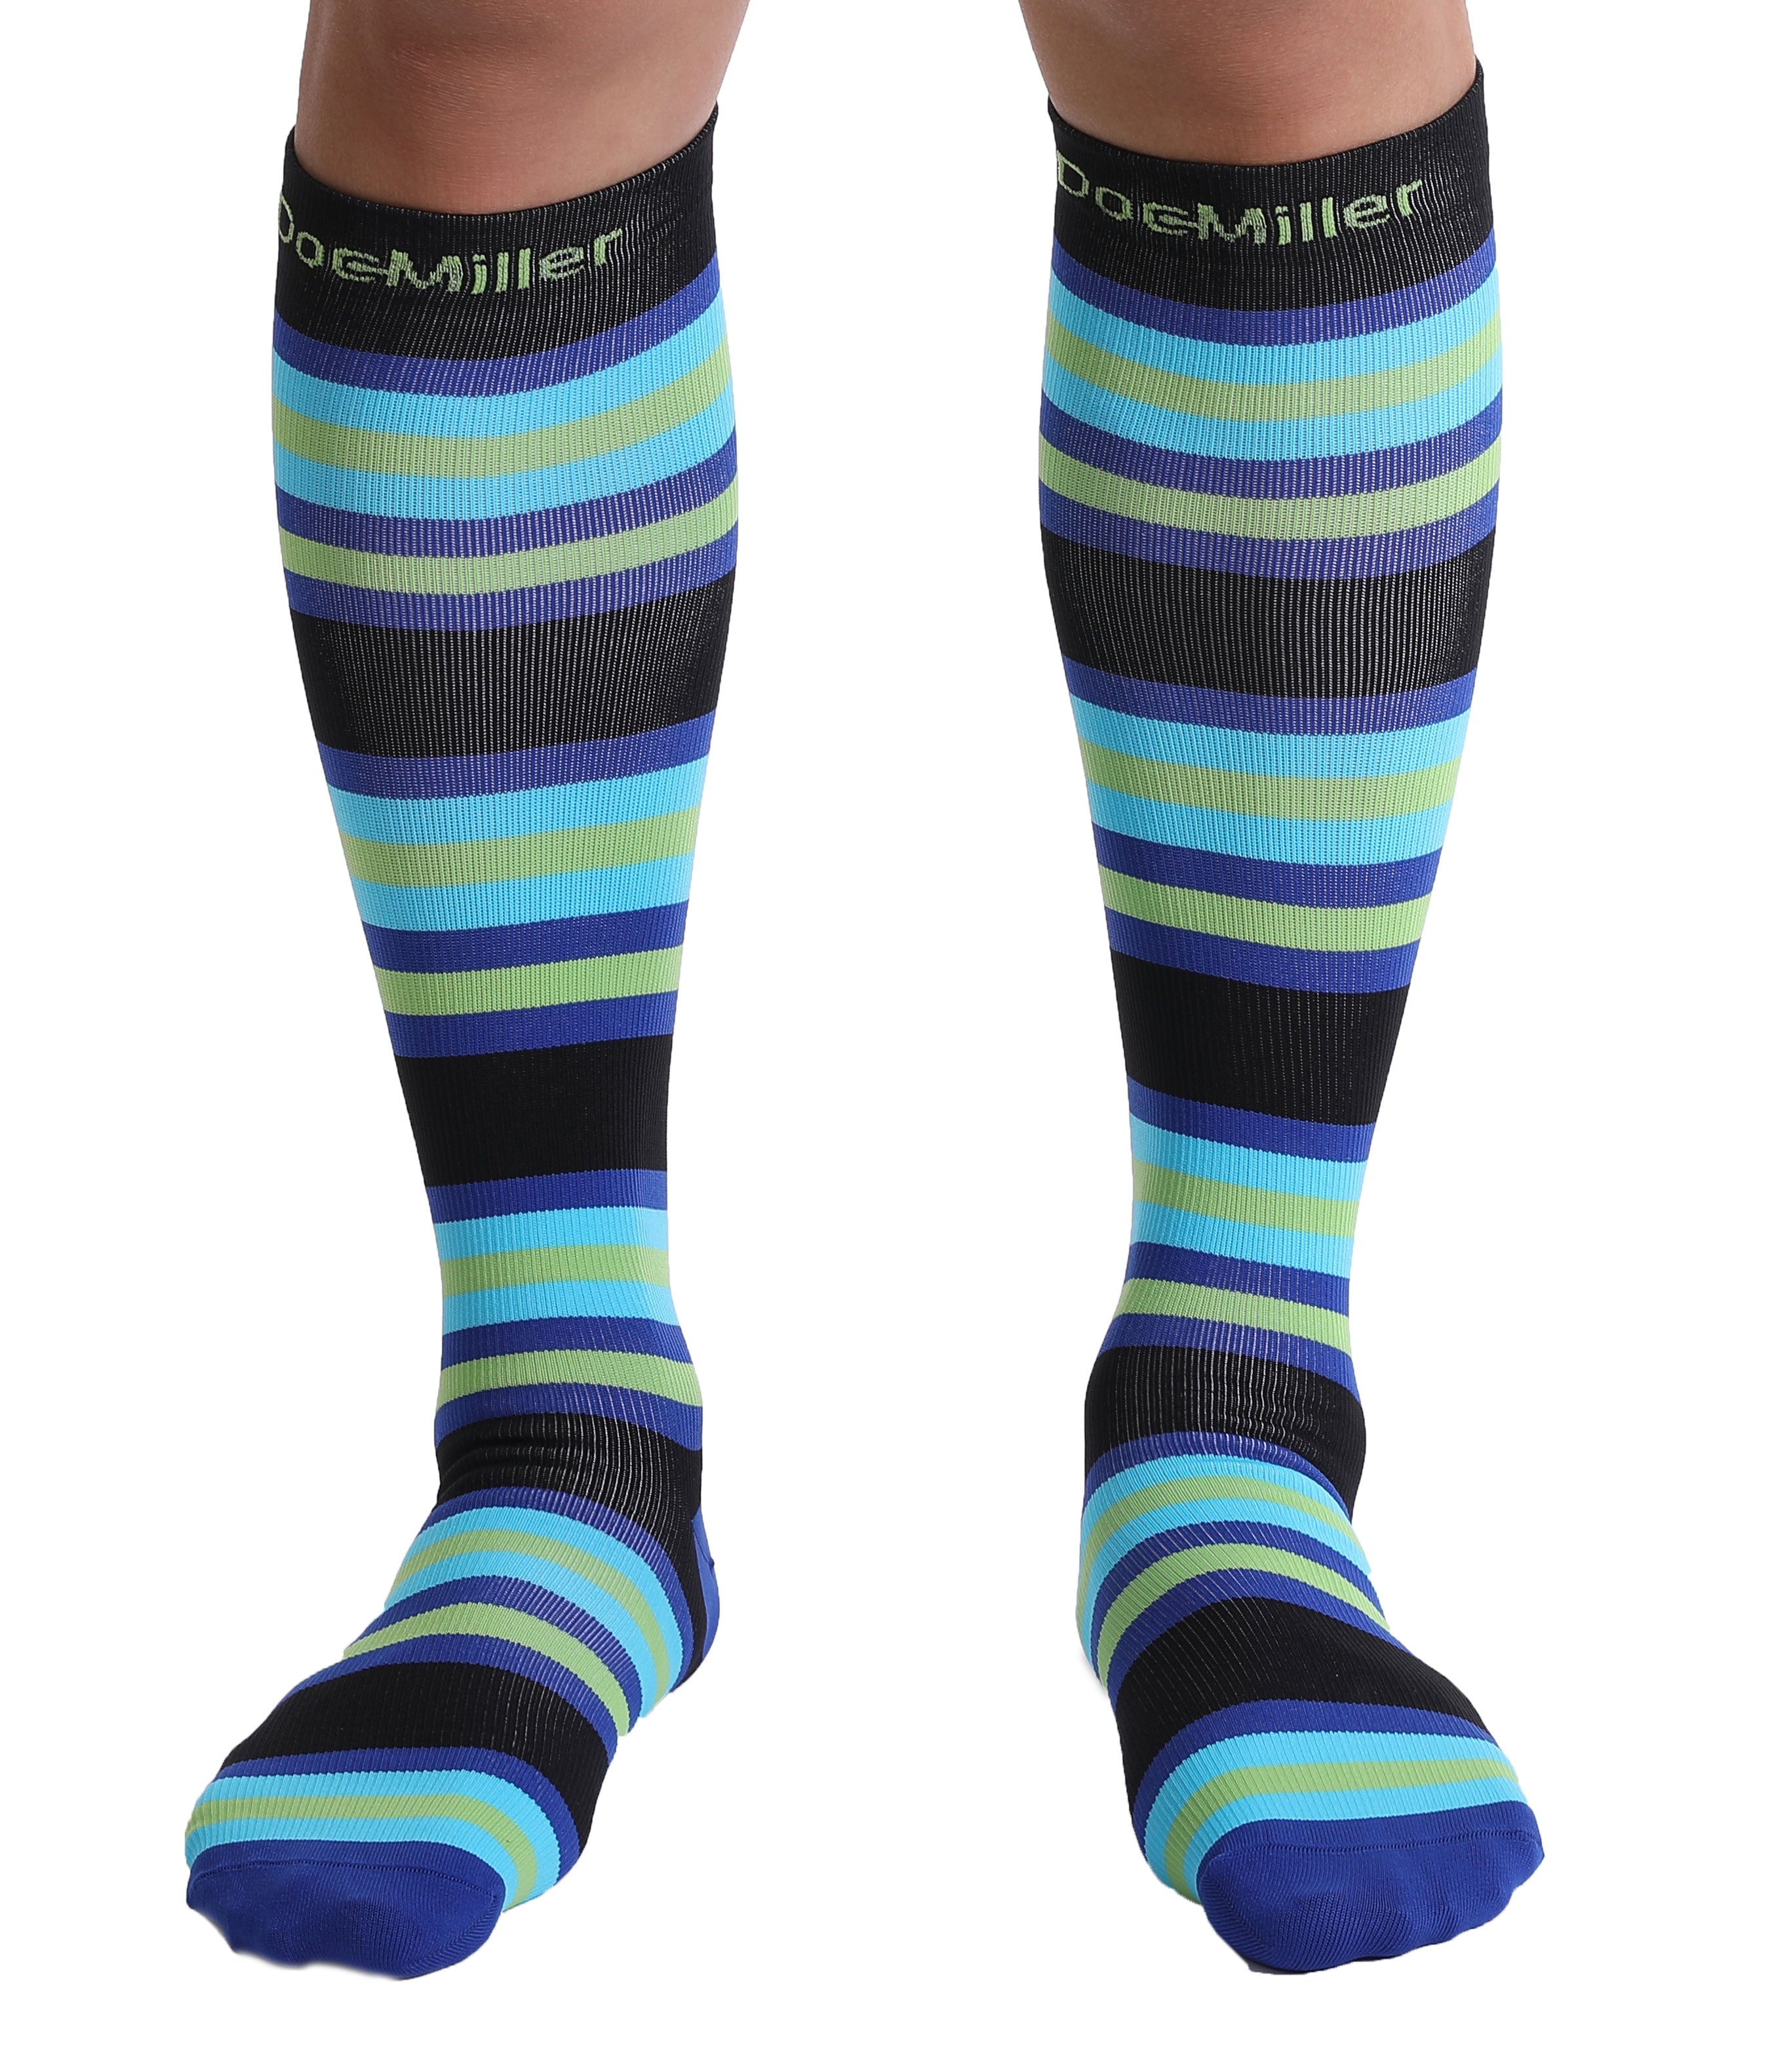 Plus Size Compression Socks Circulation 15-20 mmhg for Women Men